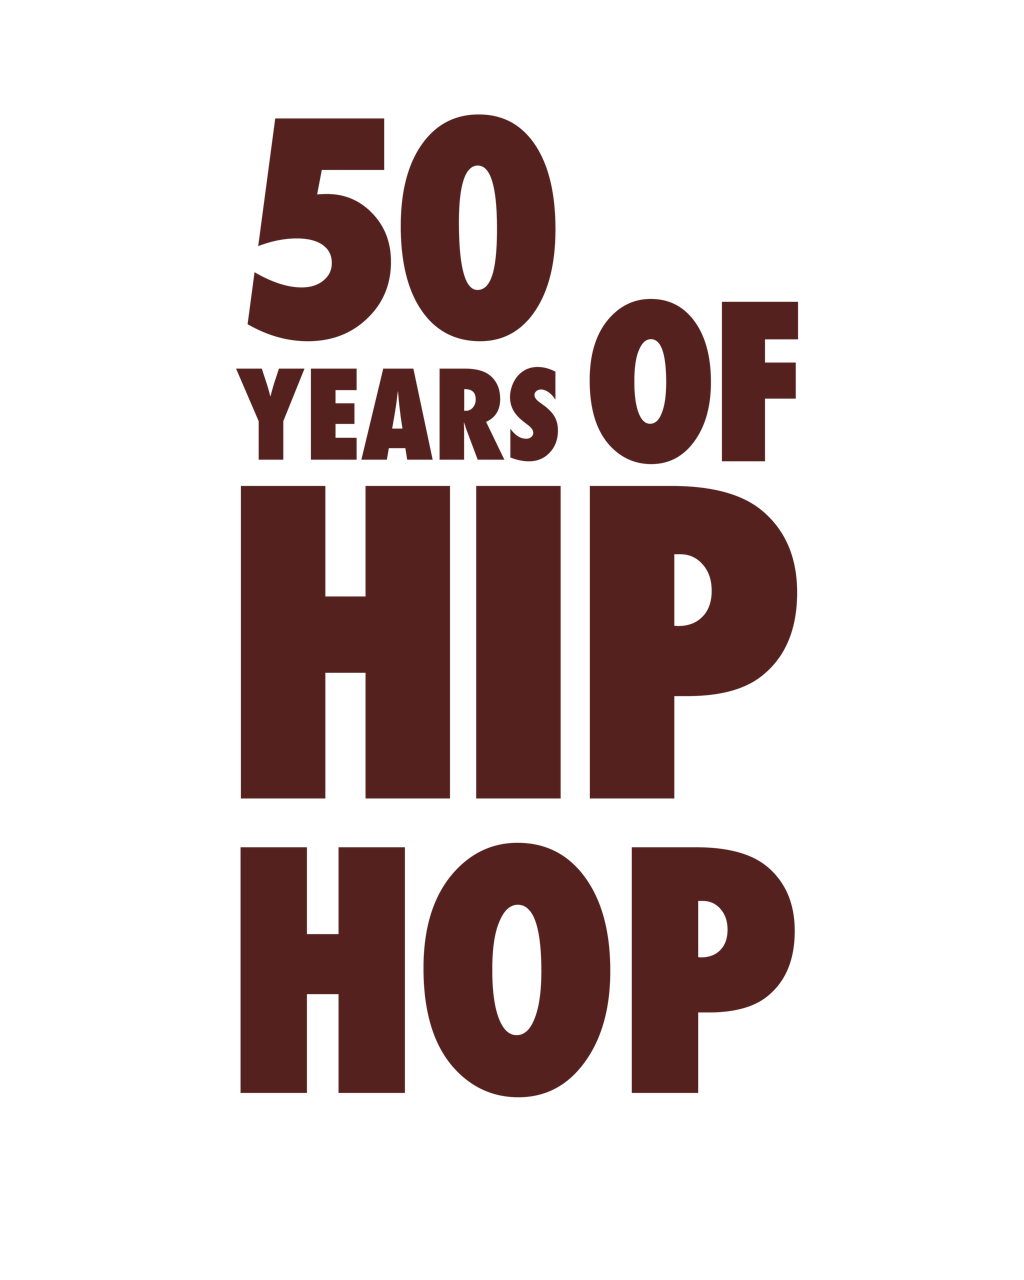 Celebrating 50 Years of hip-hop